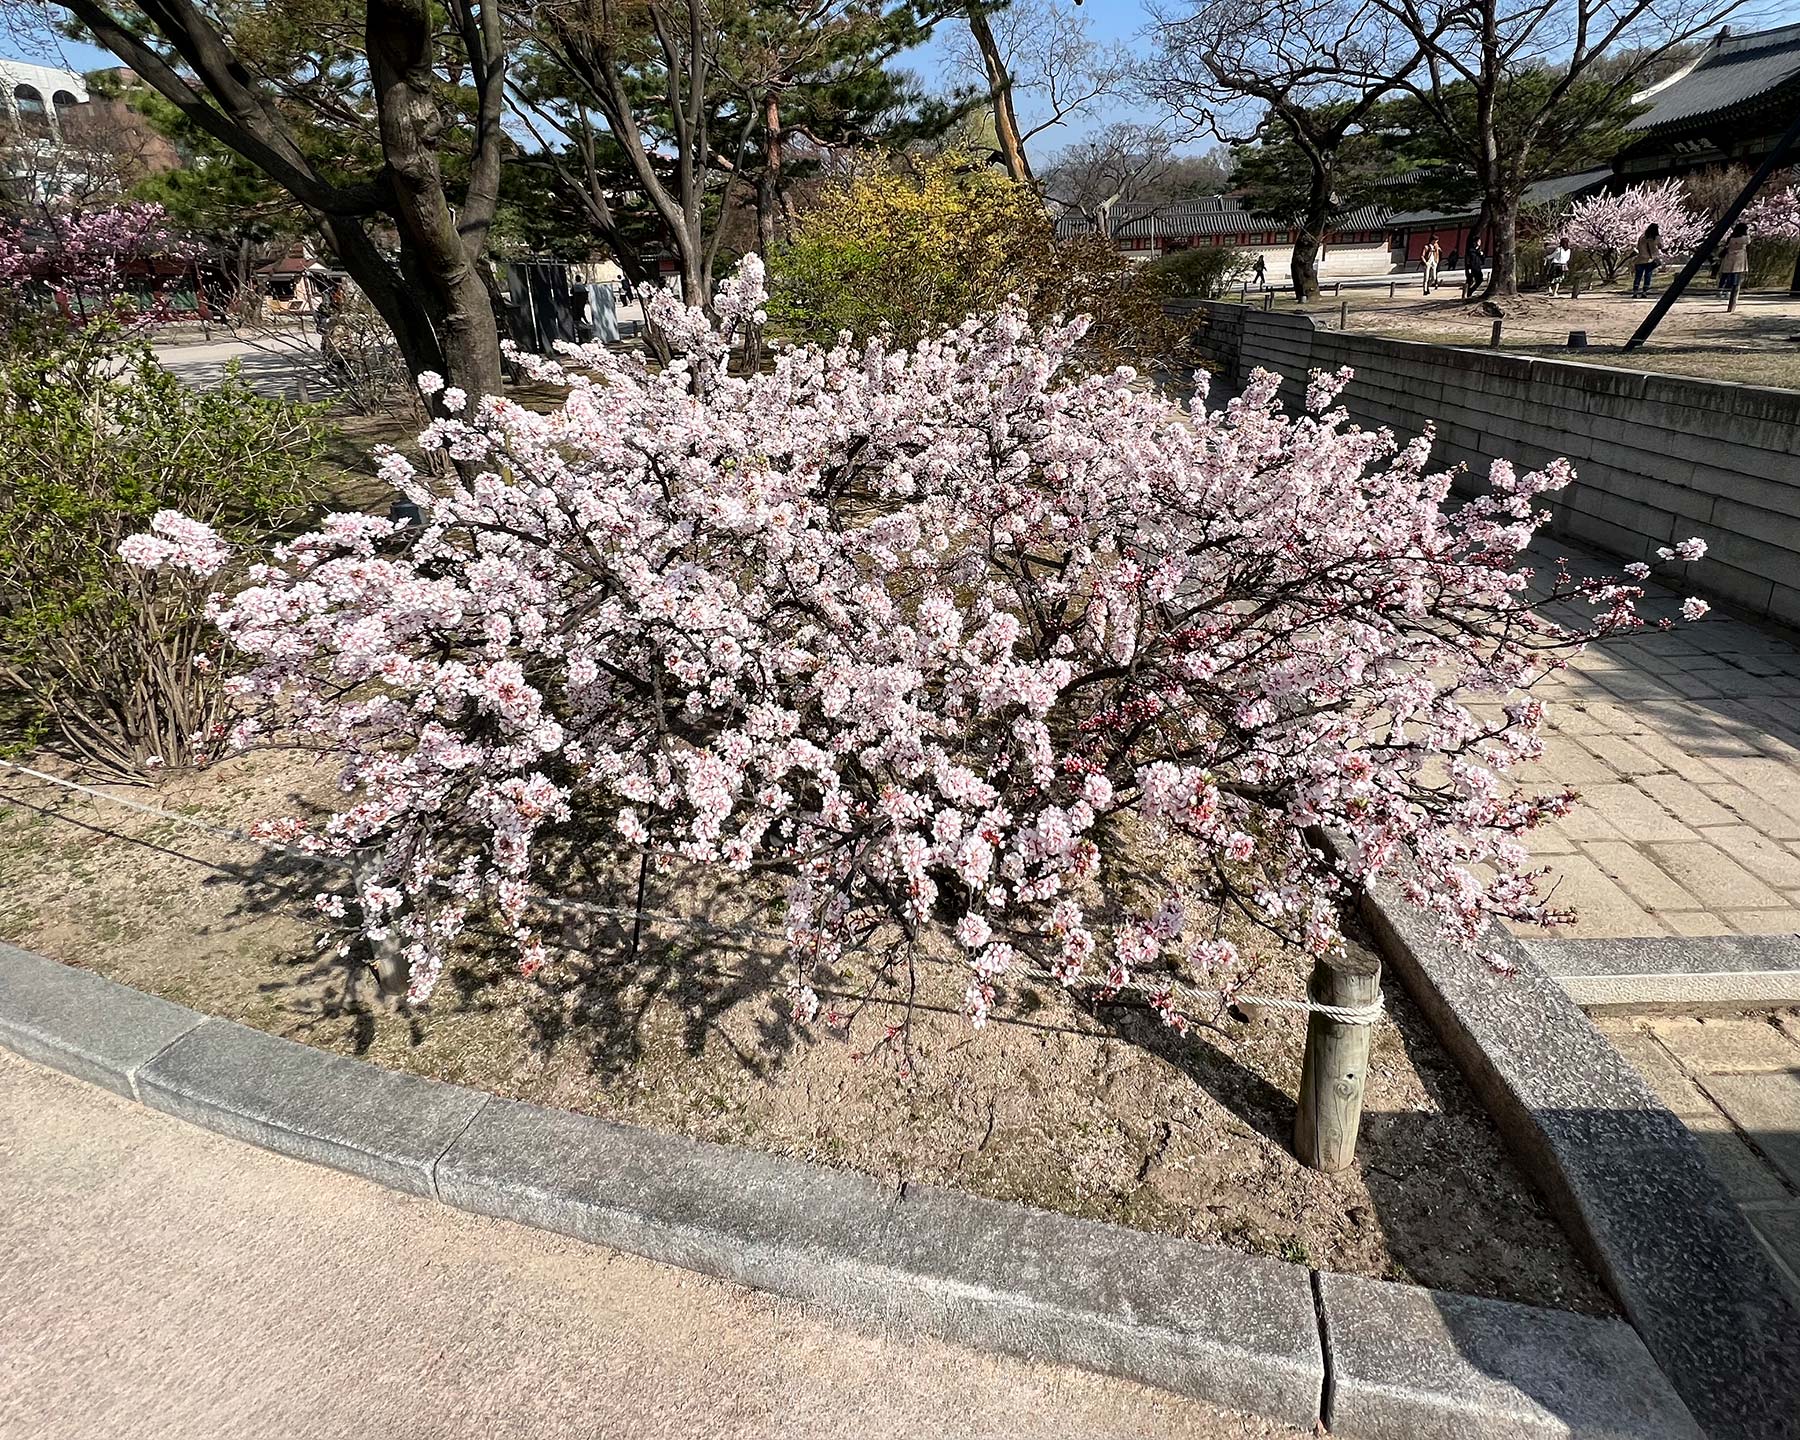 Prunus mume - Chinese Plum or Japanese Apricot